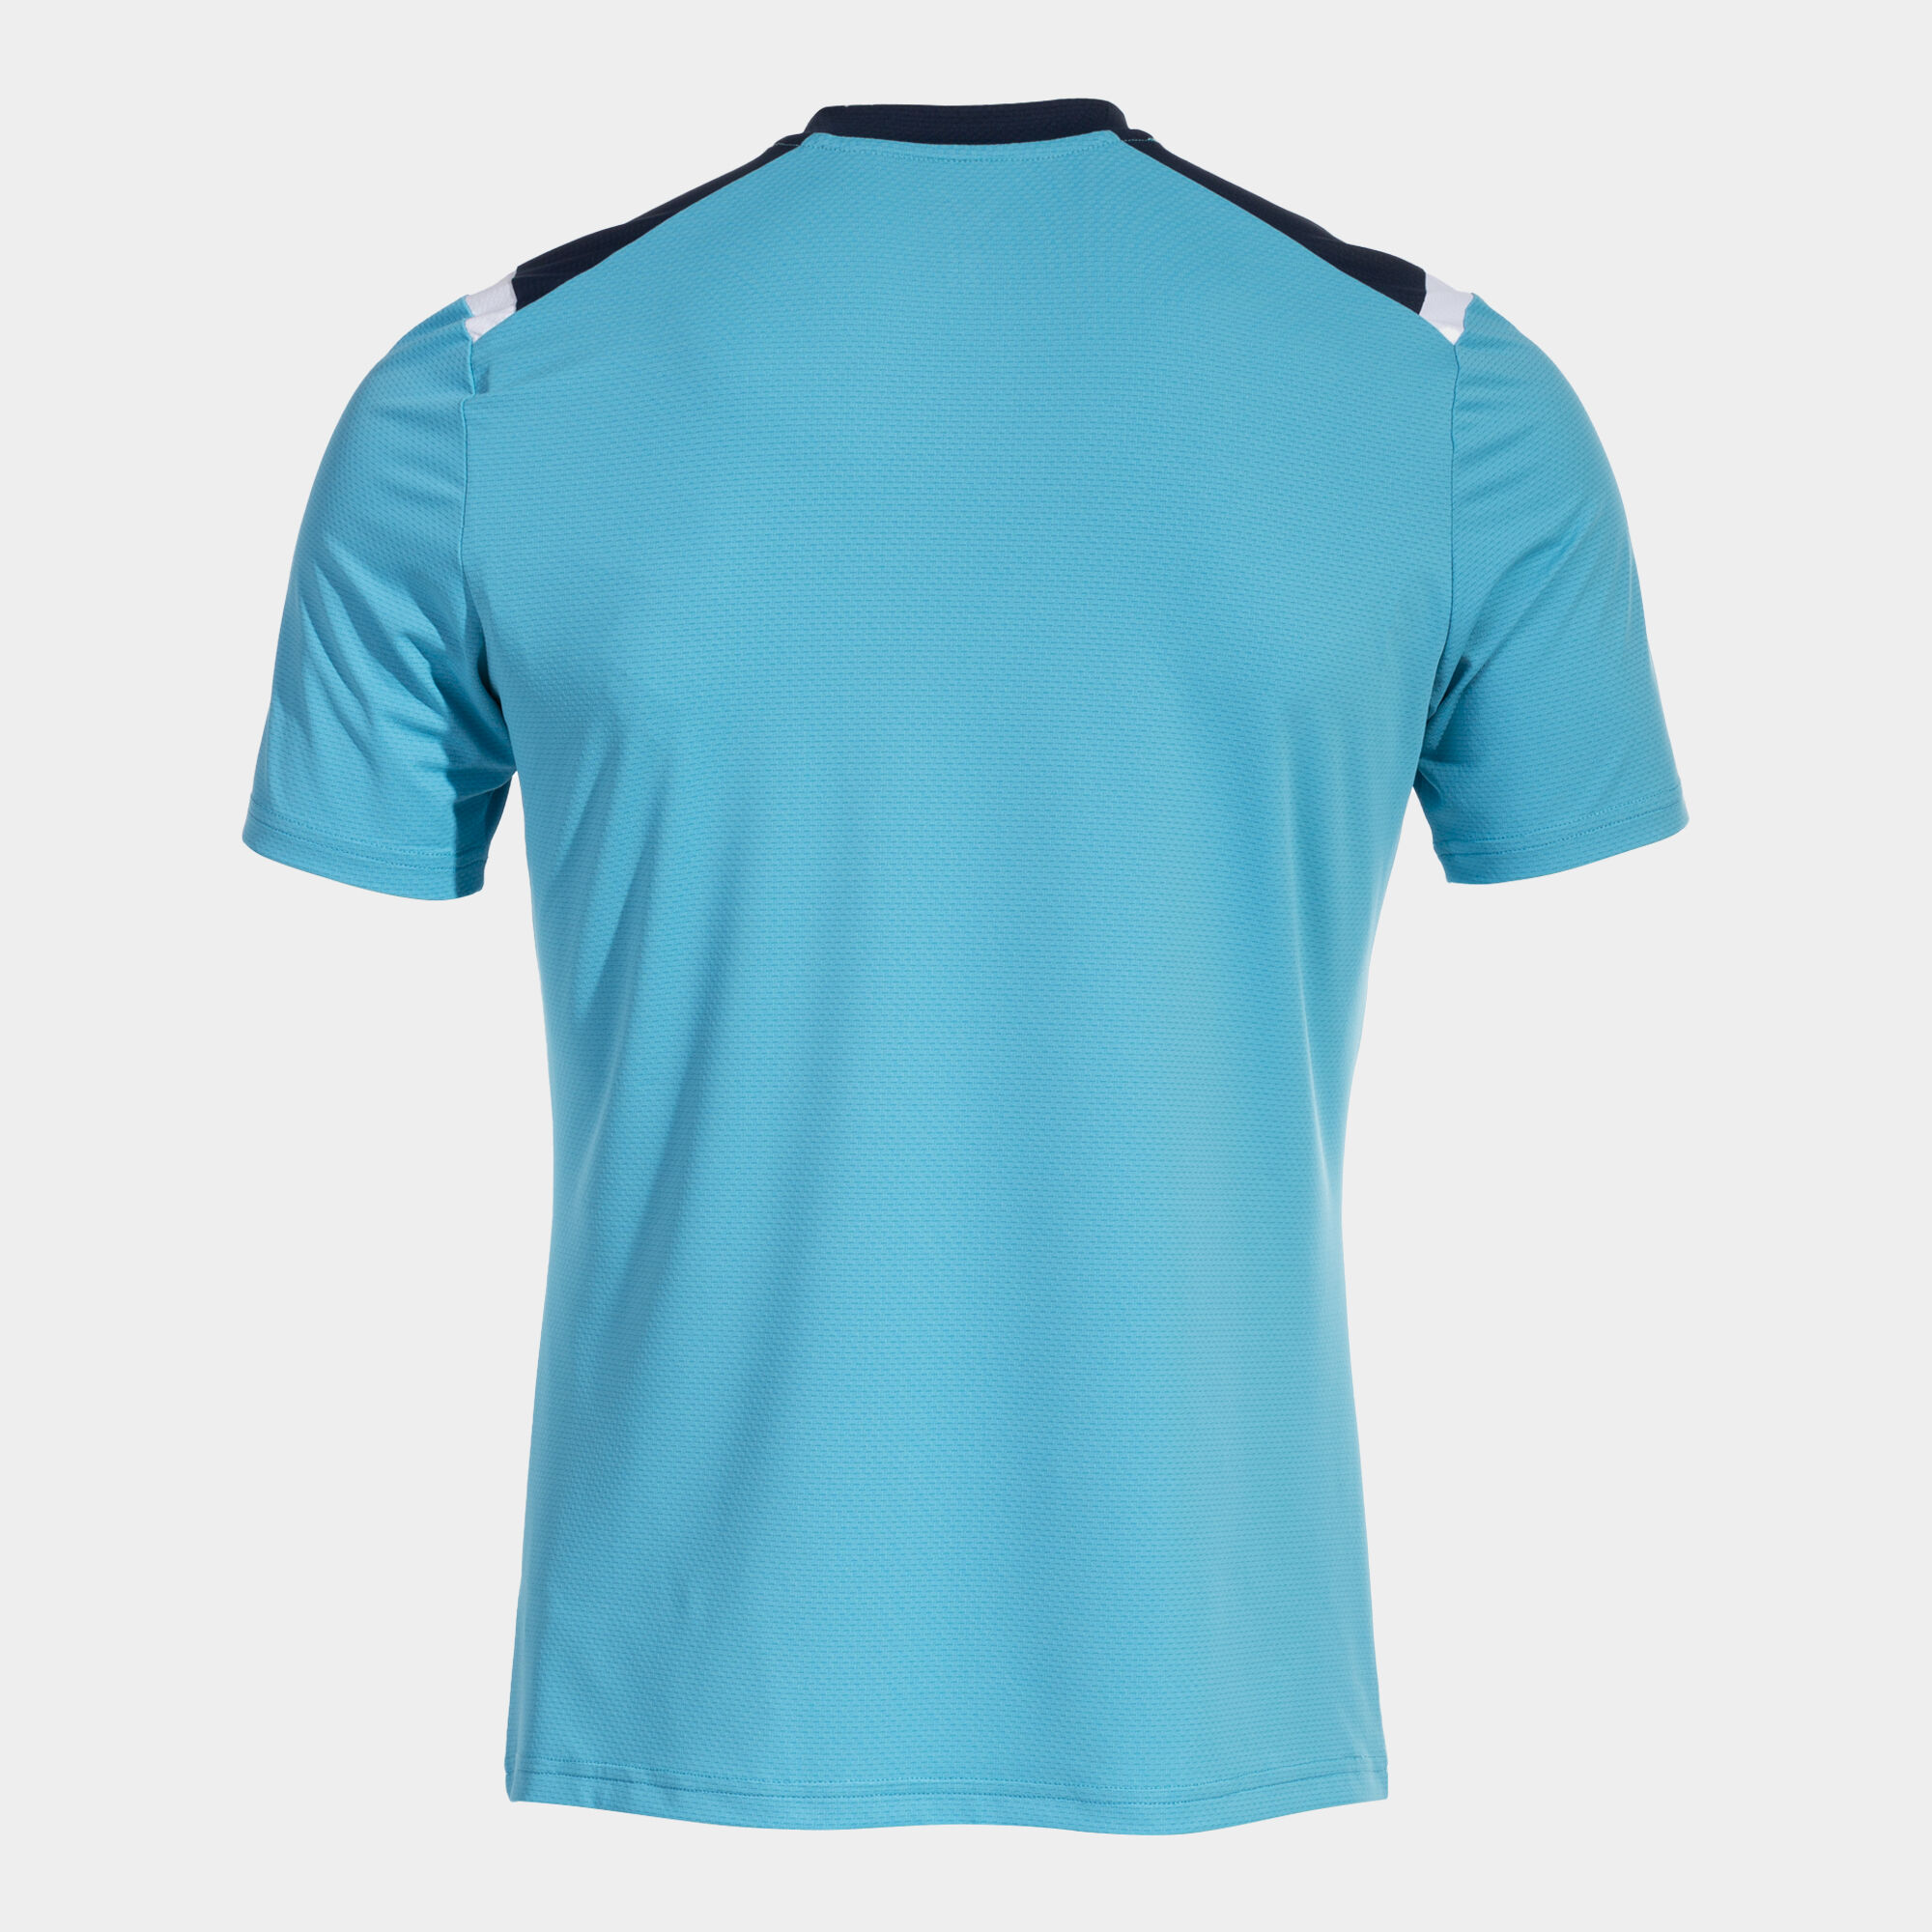 Shirt short sleeve man Toledo fluorescent turquoise navy blue